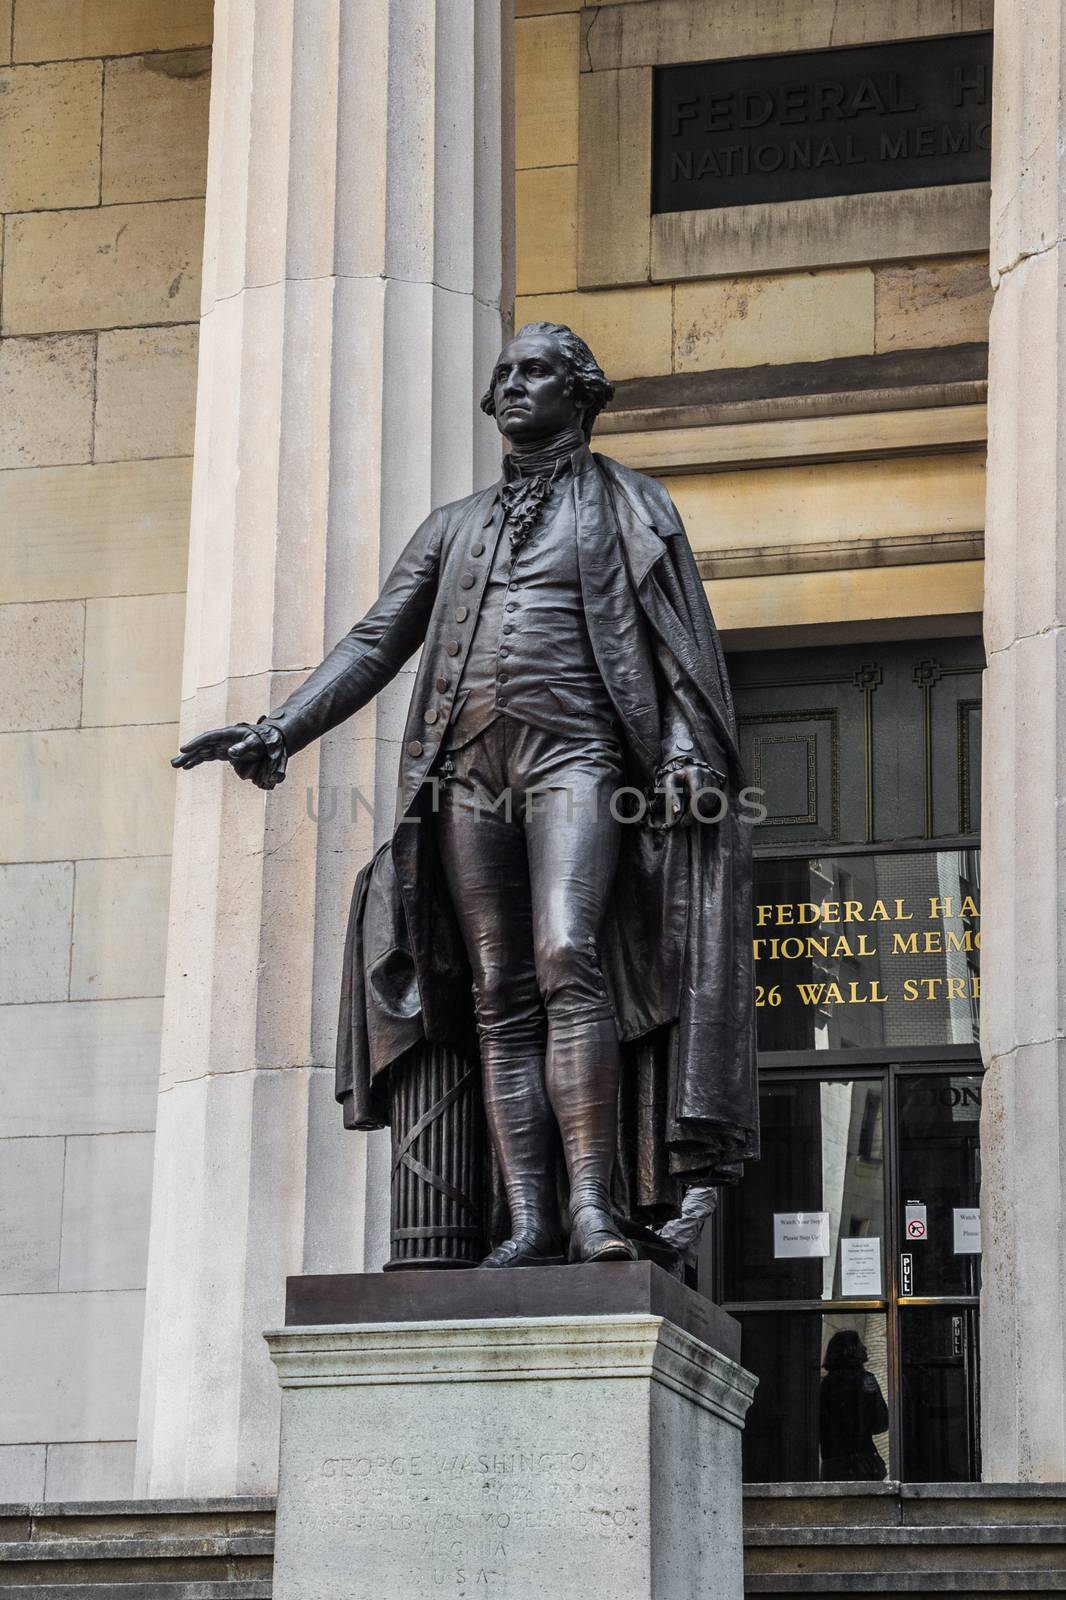 Statue of George Washington at New York Manhattan financial dist by MXW_Stock